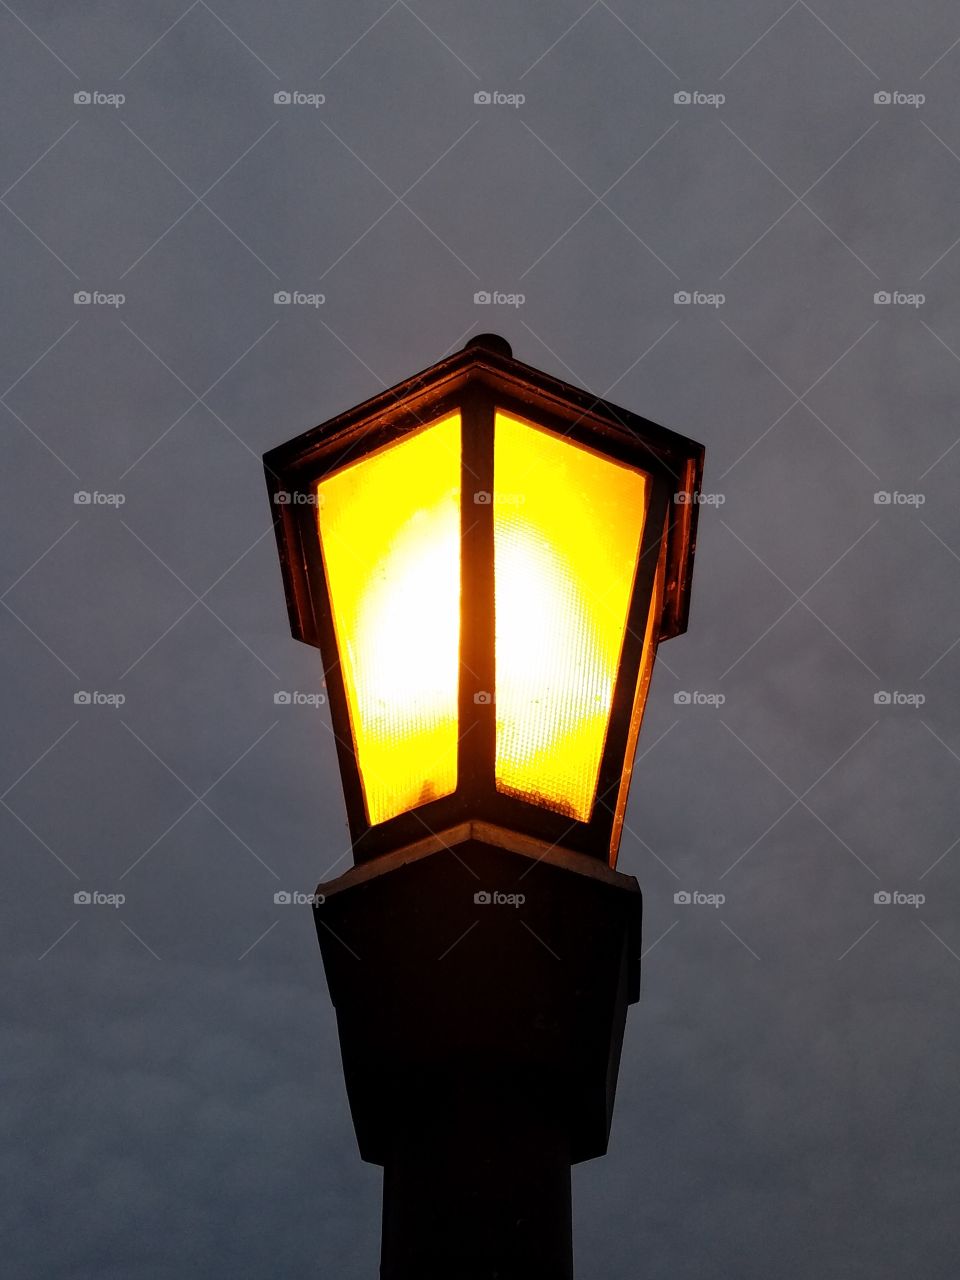 Lamp closeup at night